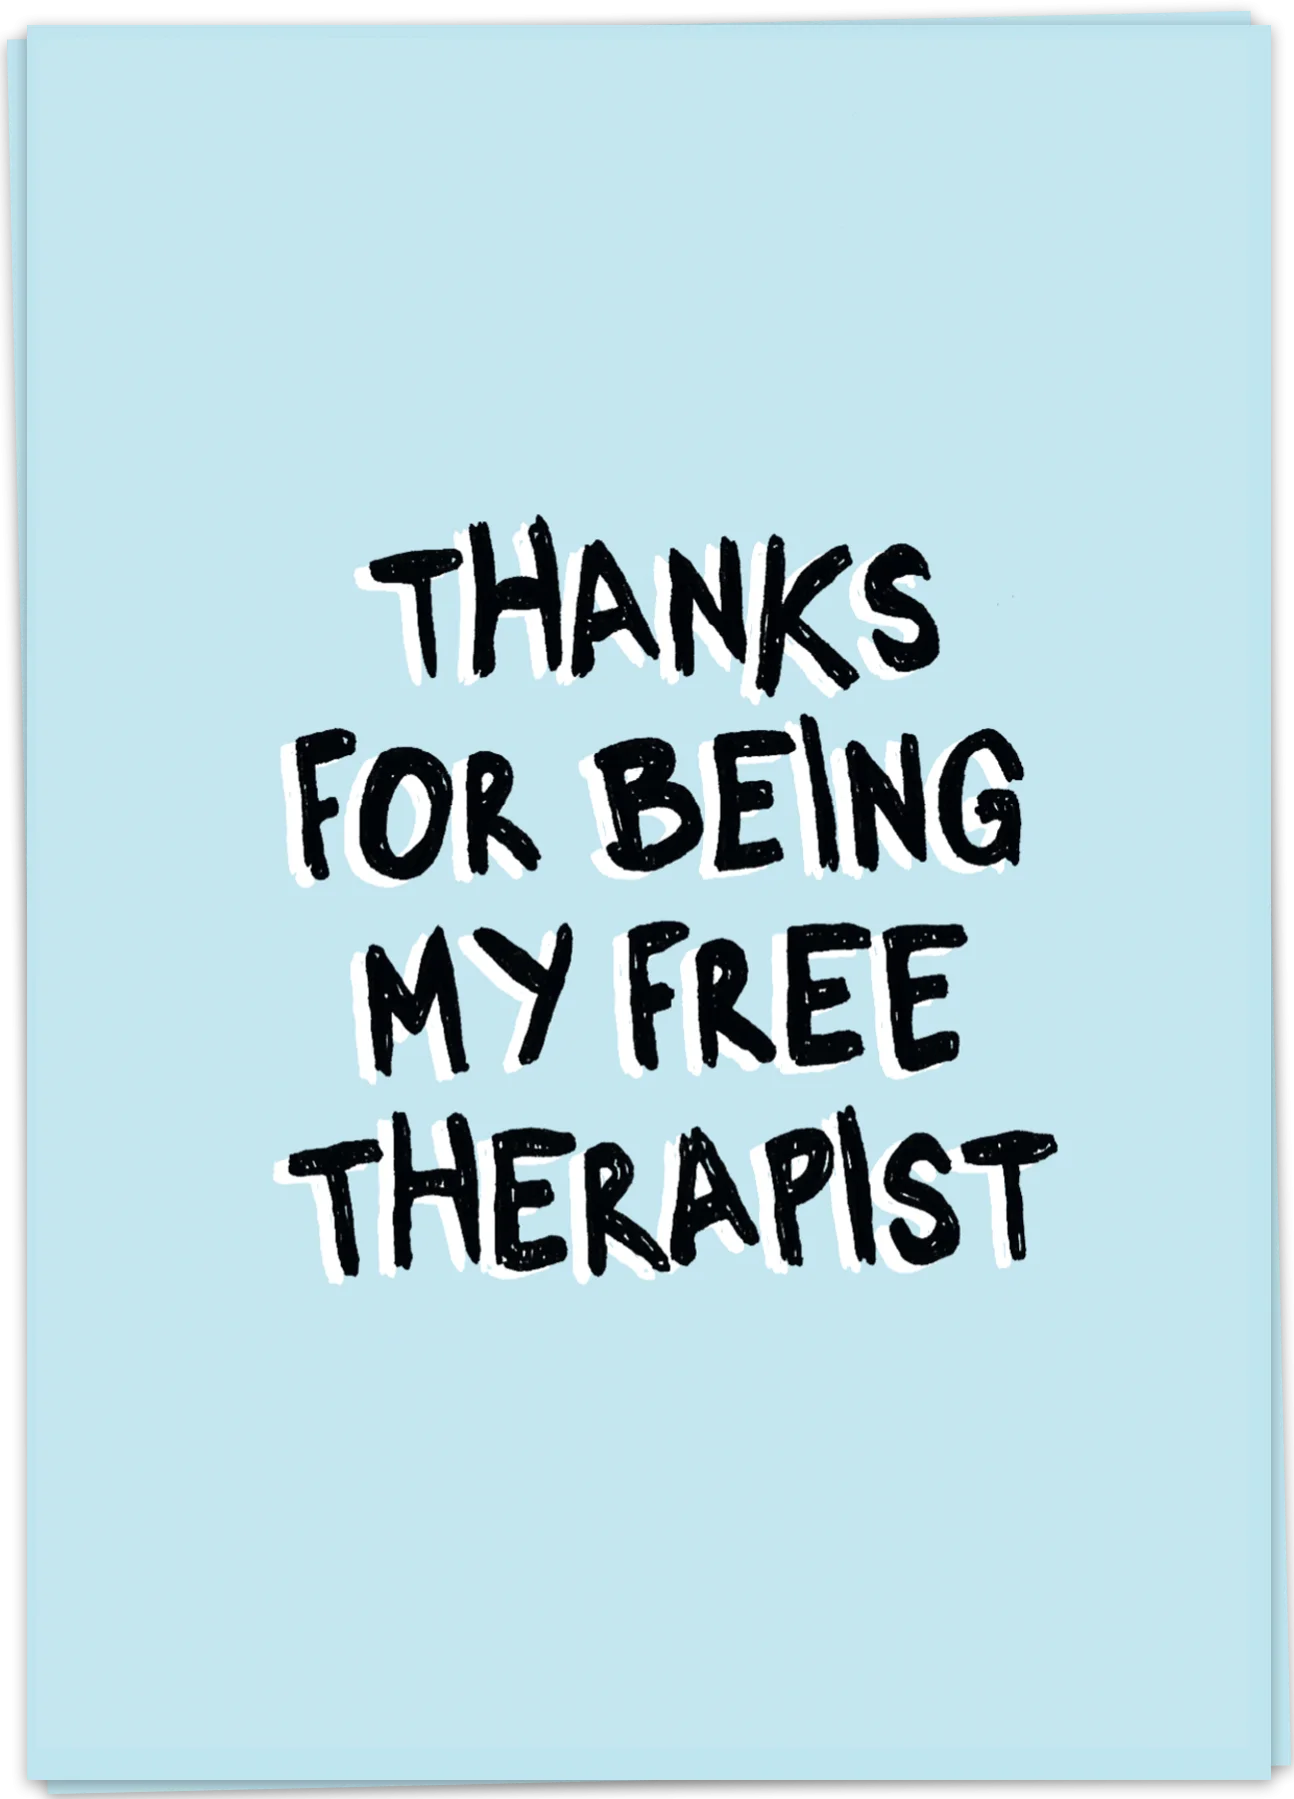 Free therapist